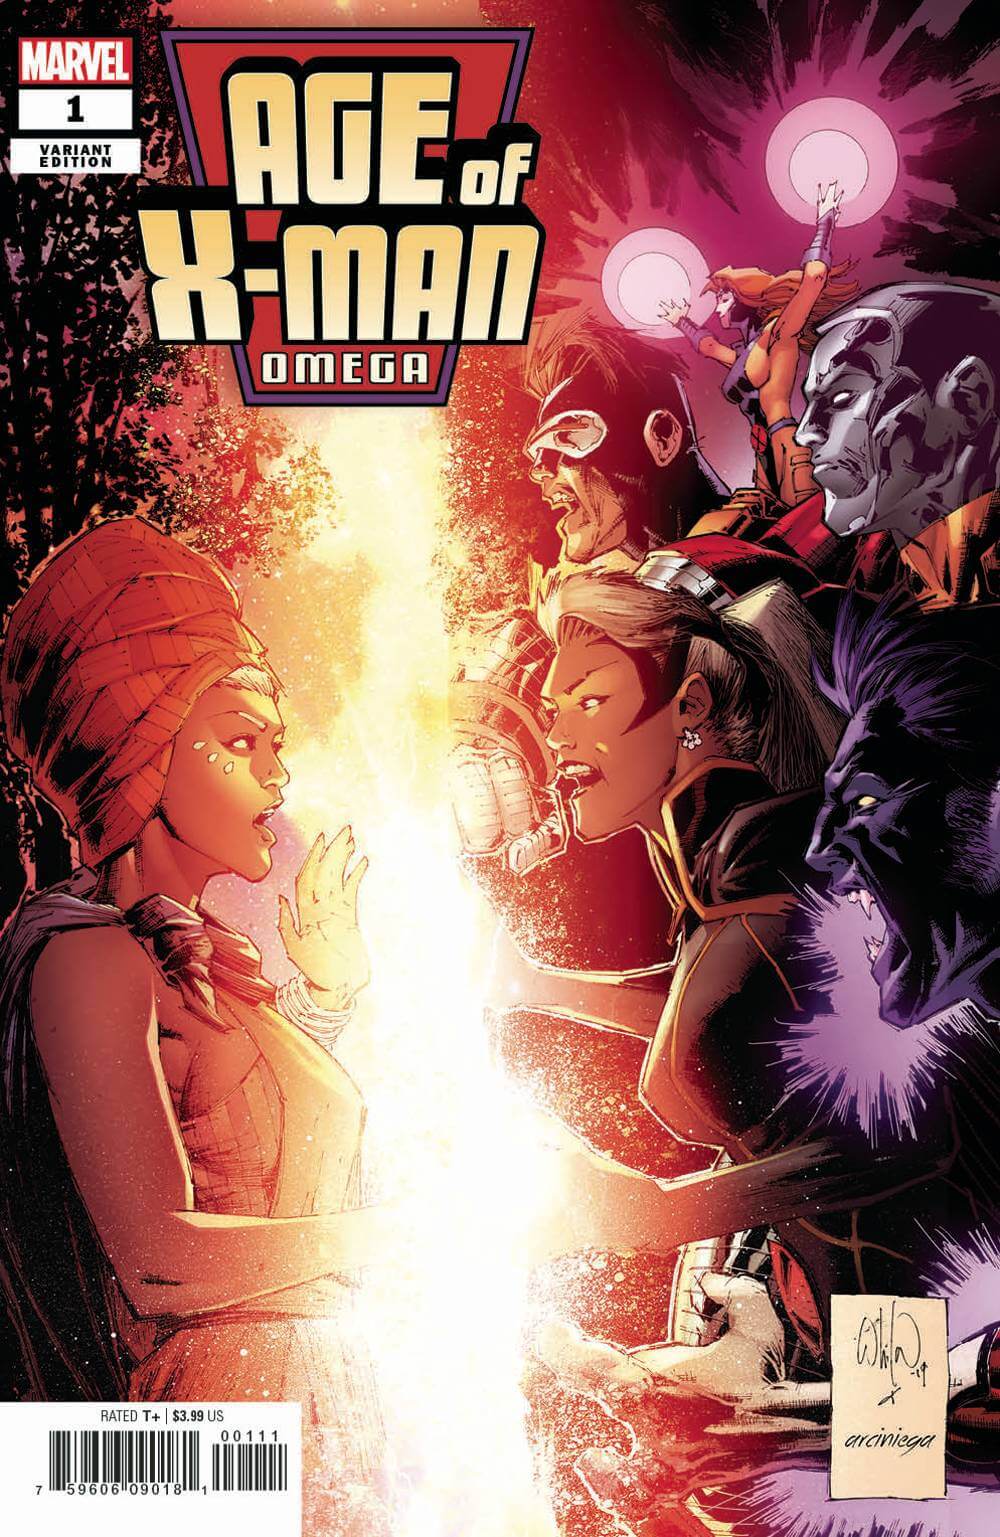 AGE OF X-MAN OMEGA #1 B Whilce PORTACIO Variant (07/17/2019) MARVEL